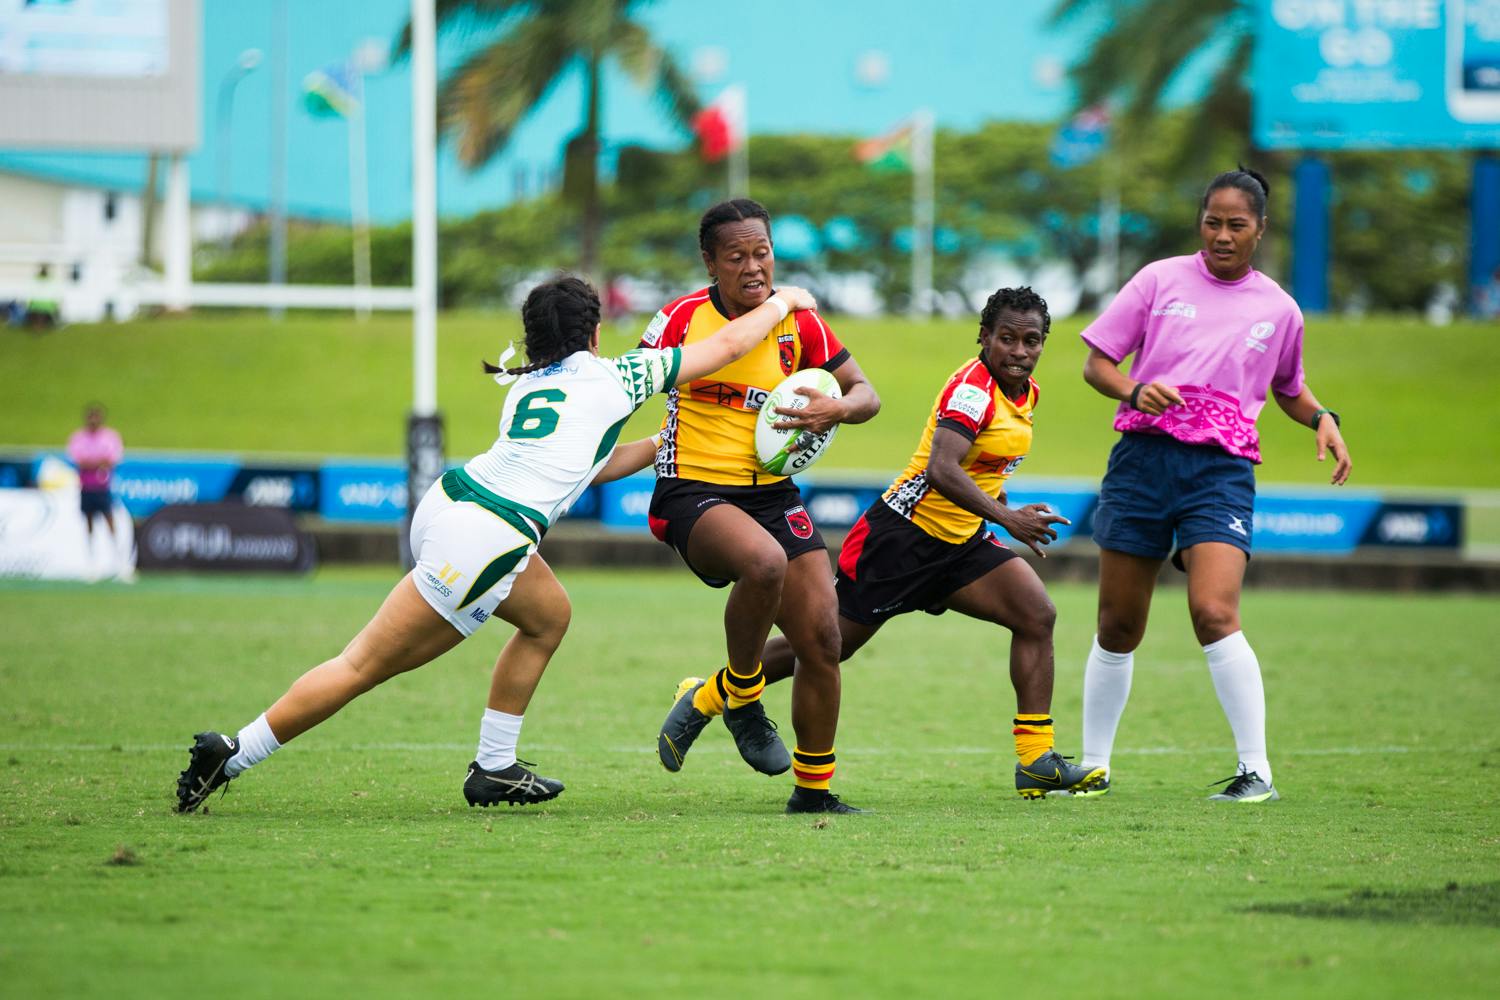 Oceania Rugby Trina Edwards